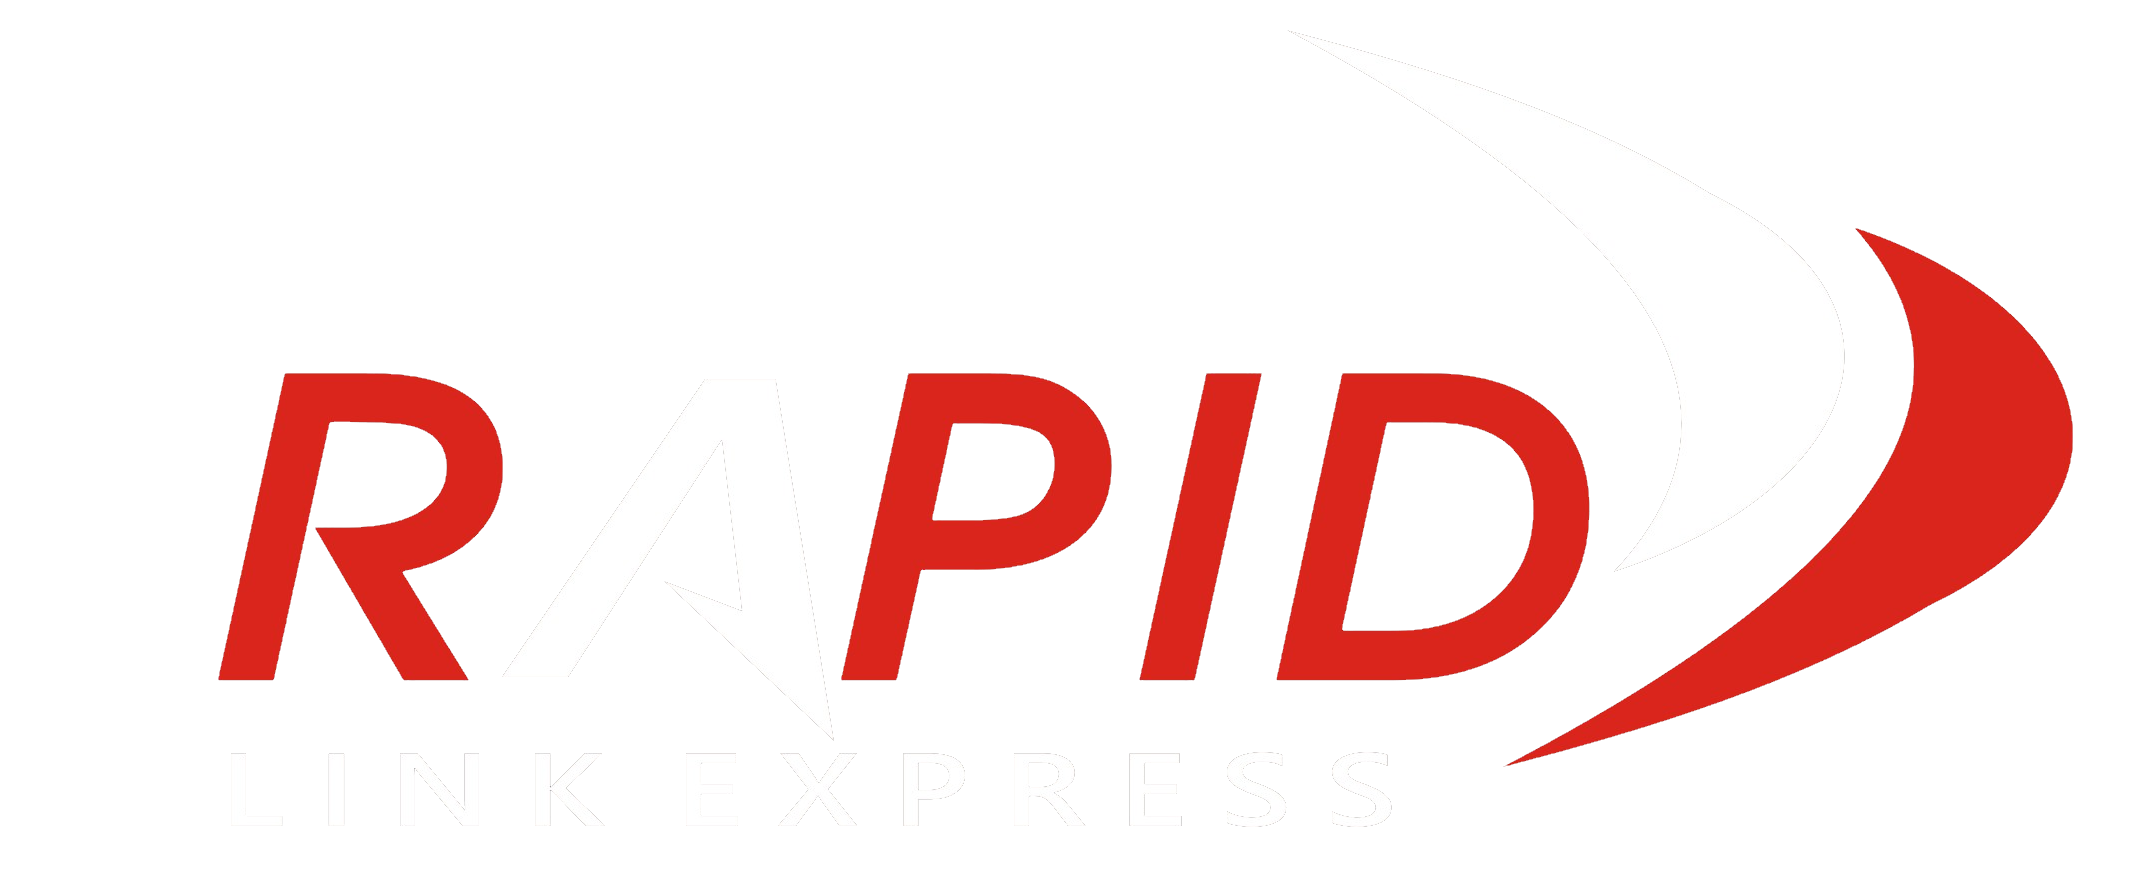 Rapid Link Express Logo